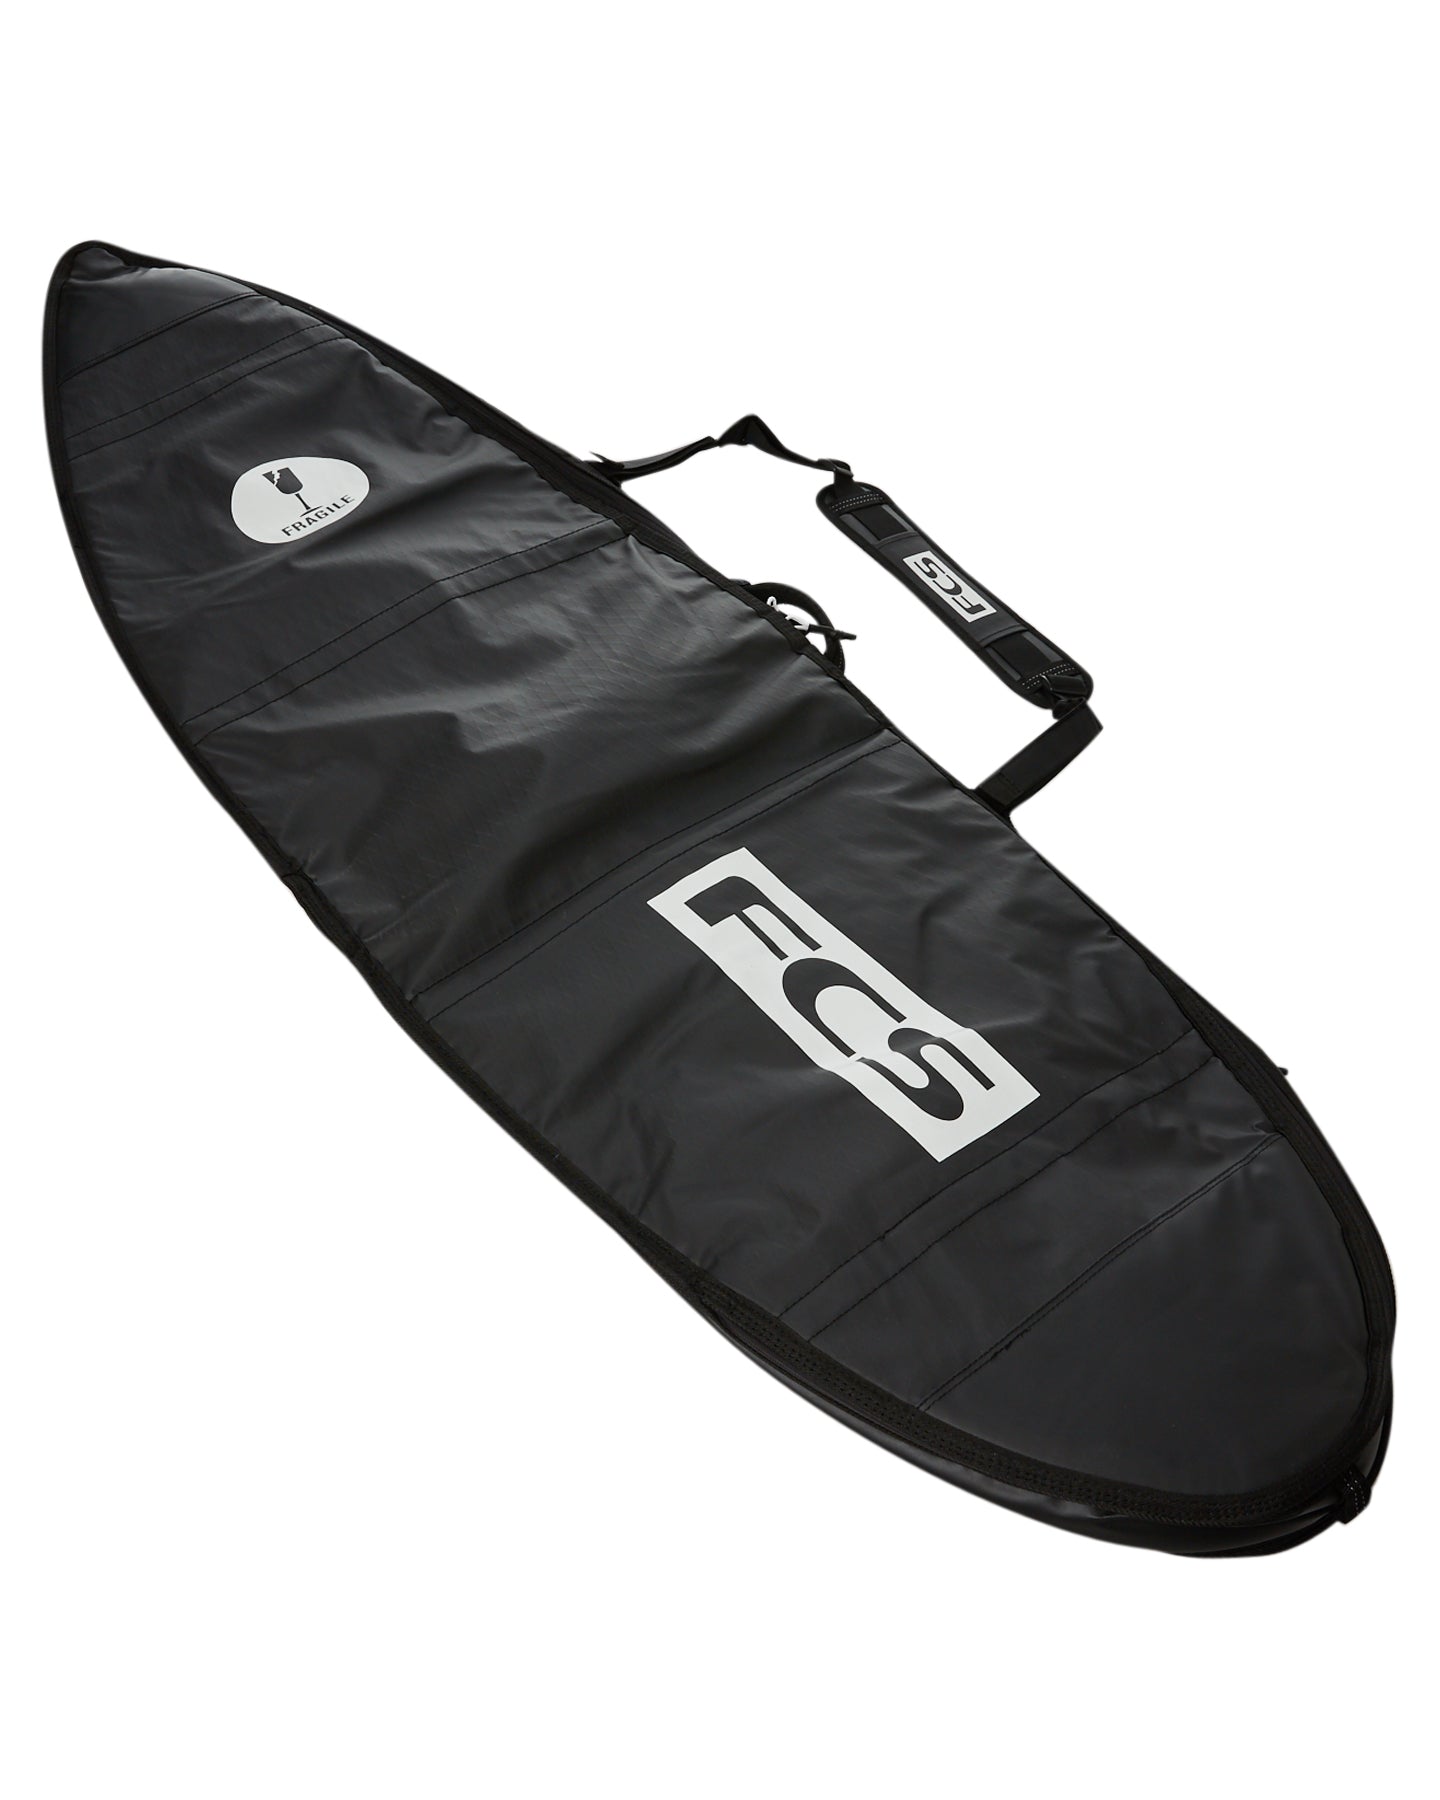 FCS Travel 1 All Purpose Boardbag Black-Grey 6ft3in